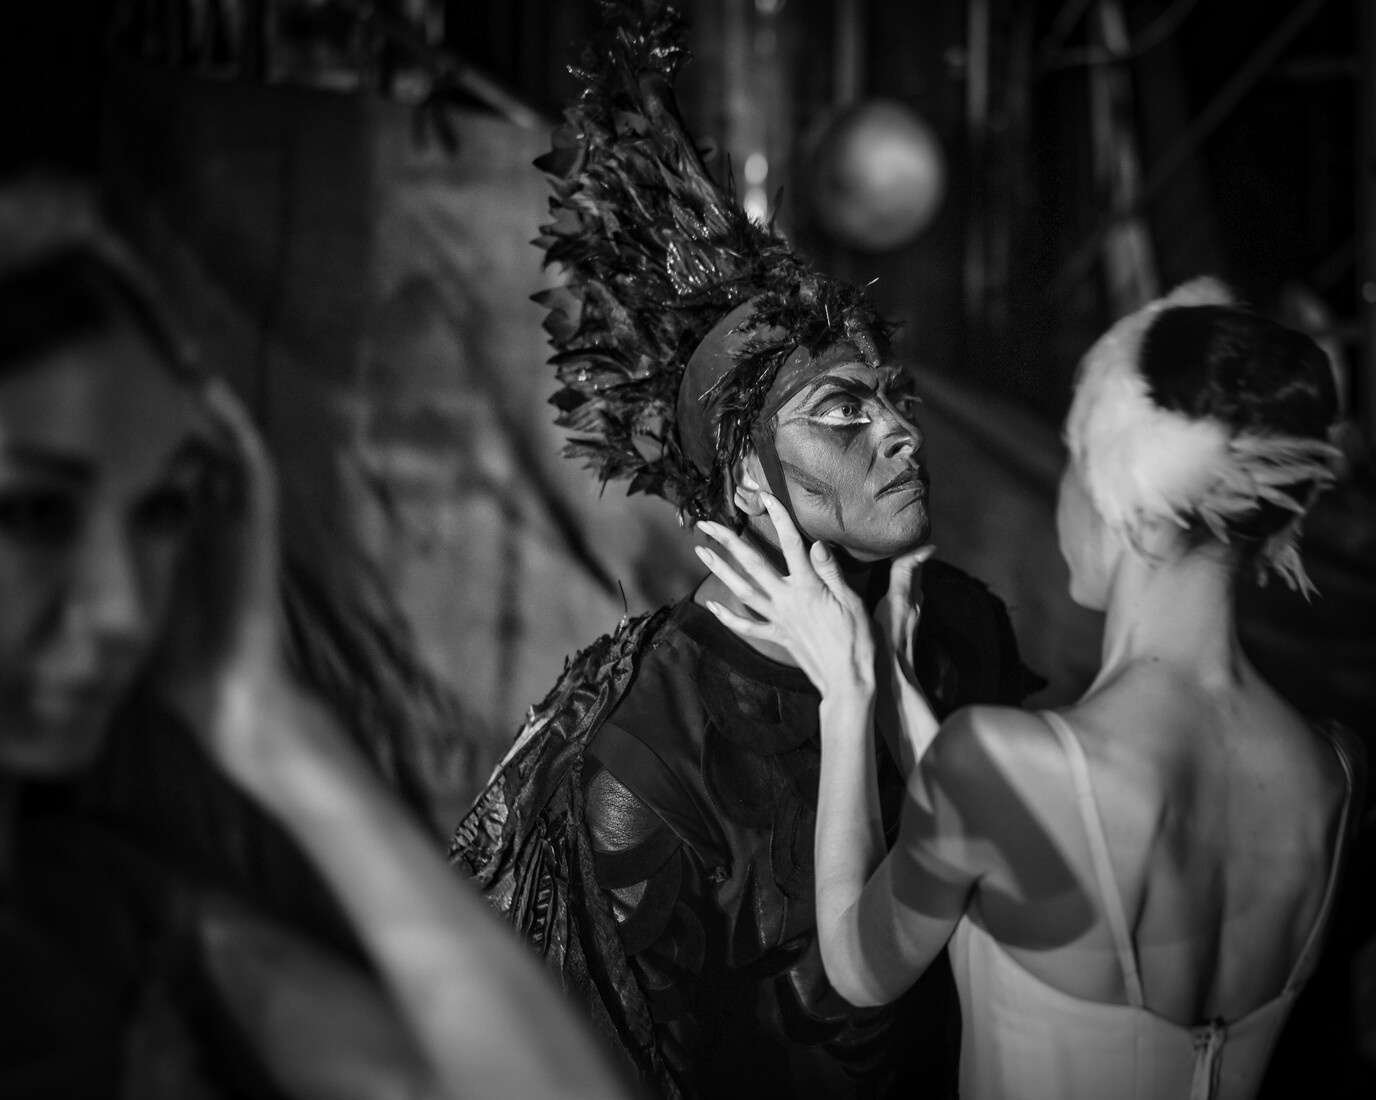 Behind The Ballet. Автор: Алексей Цилер. Новосибирск